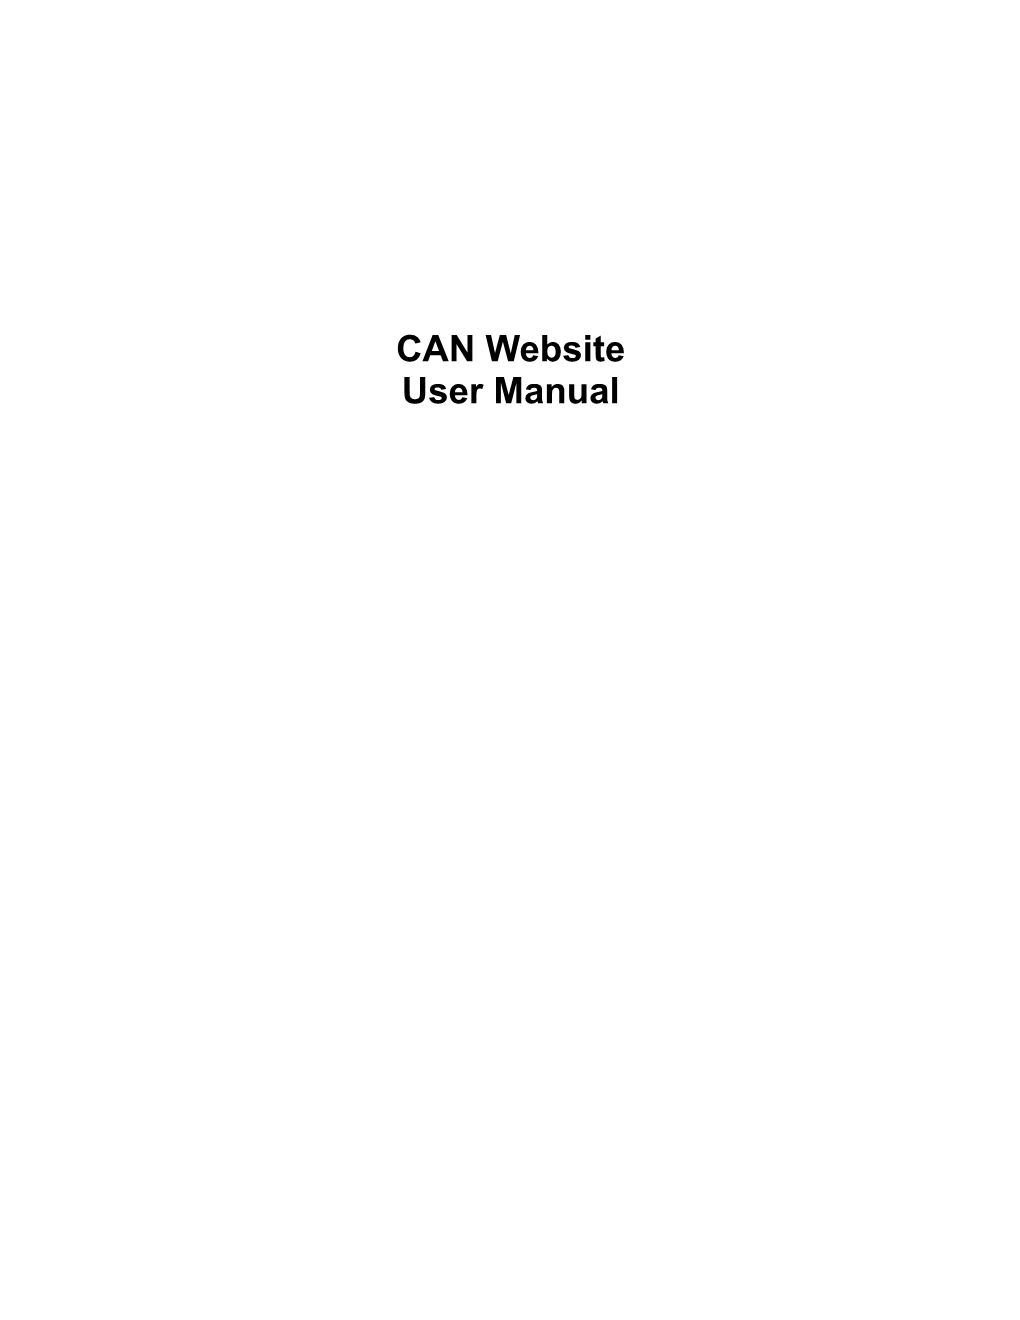 CAN Website Usermanual